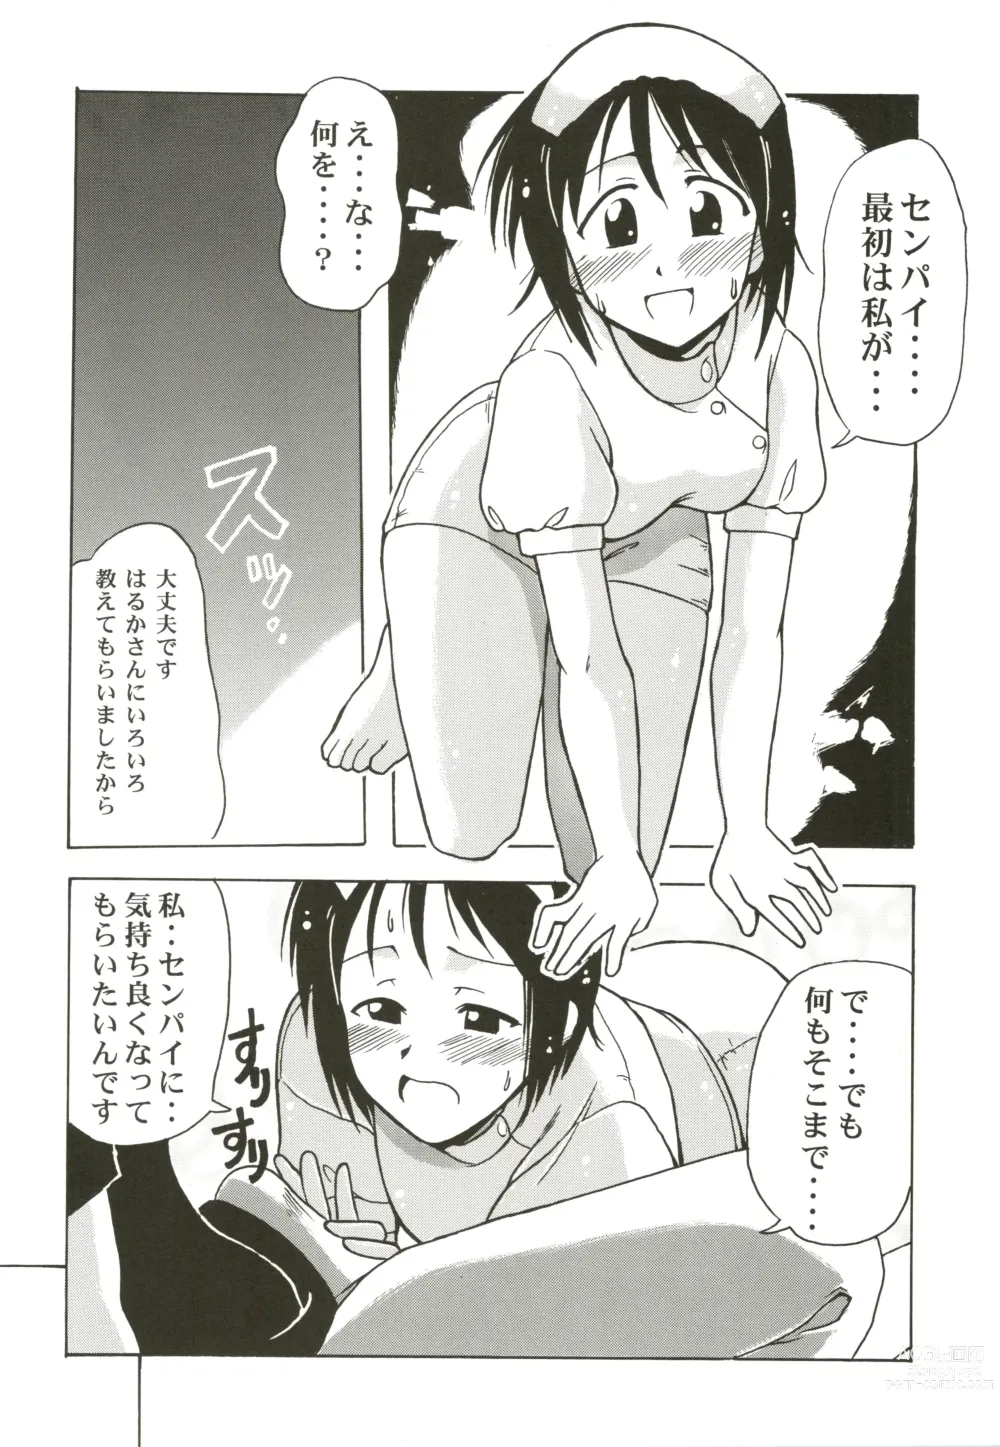 Page 24 of doujinshi Shinobu SP.